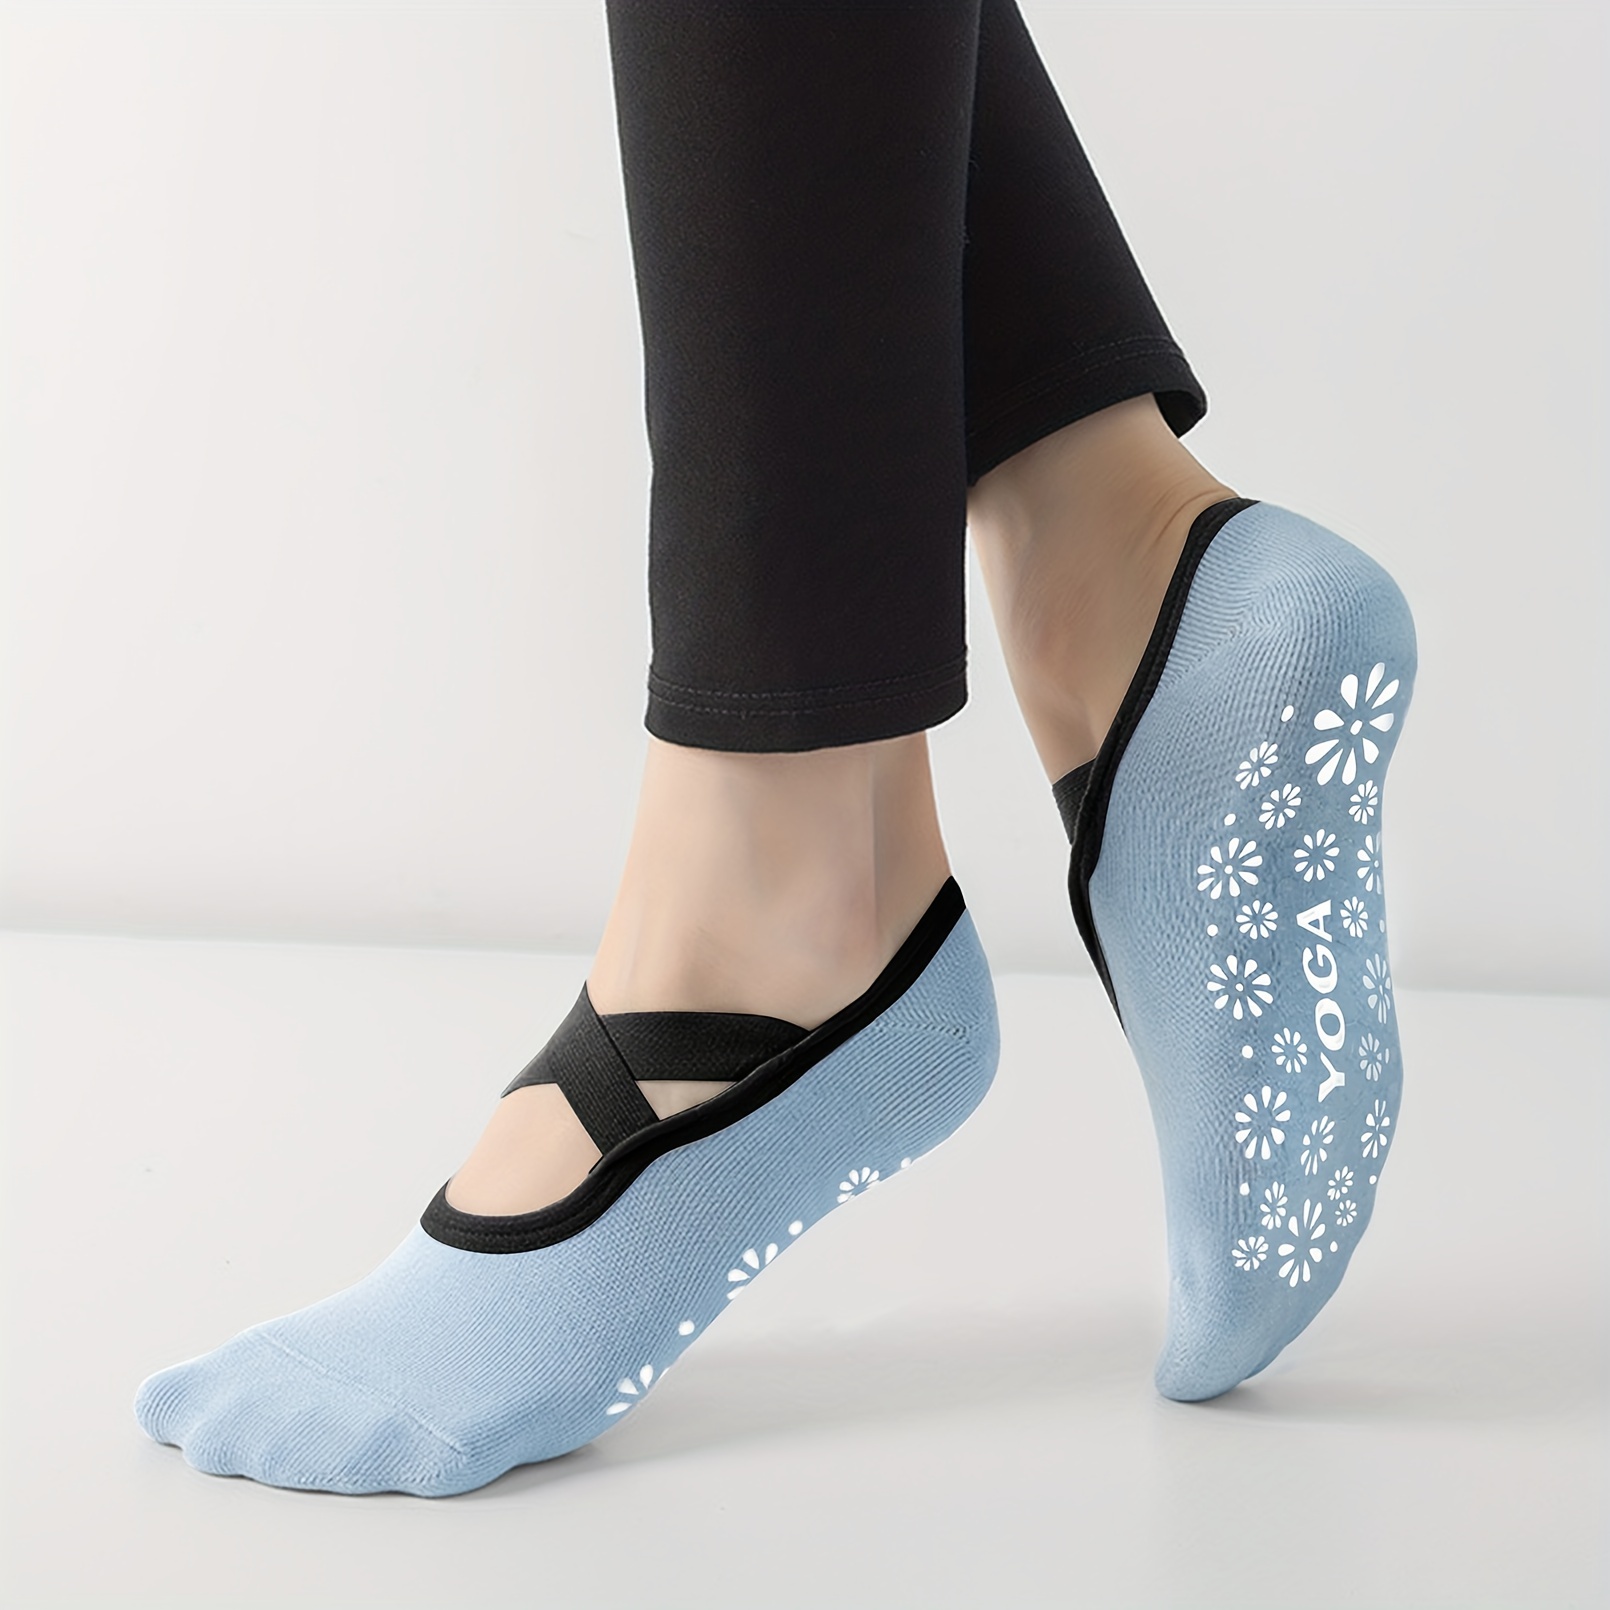 Ballerina Socks - Minimalist Grey